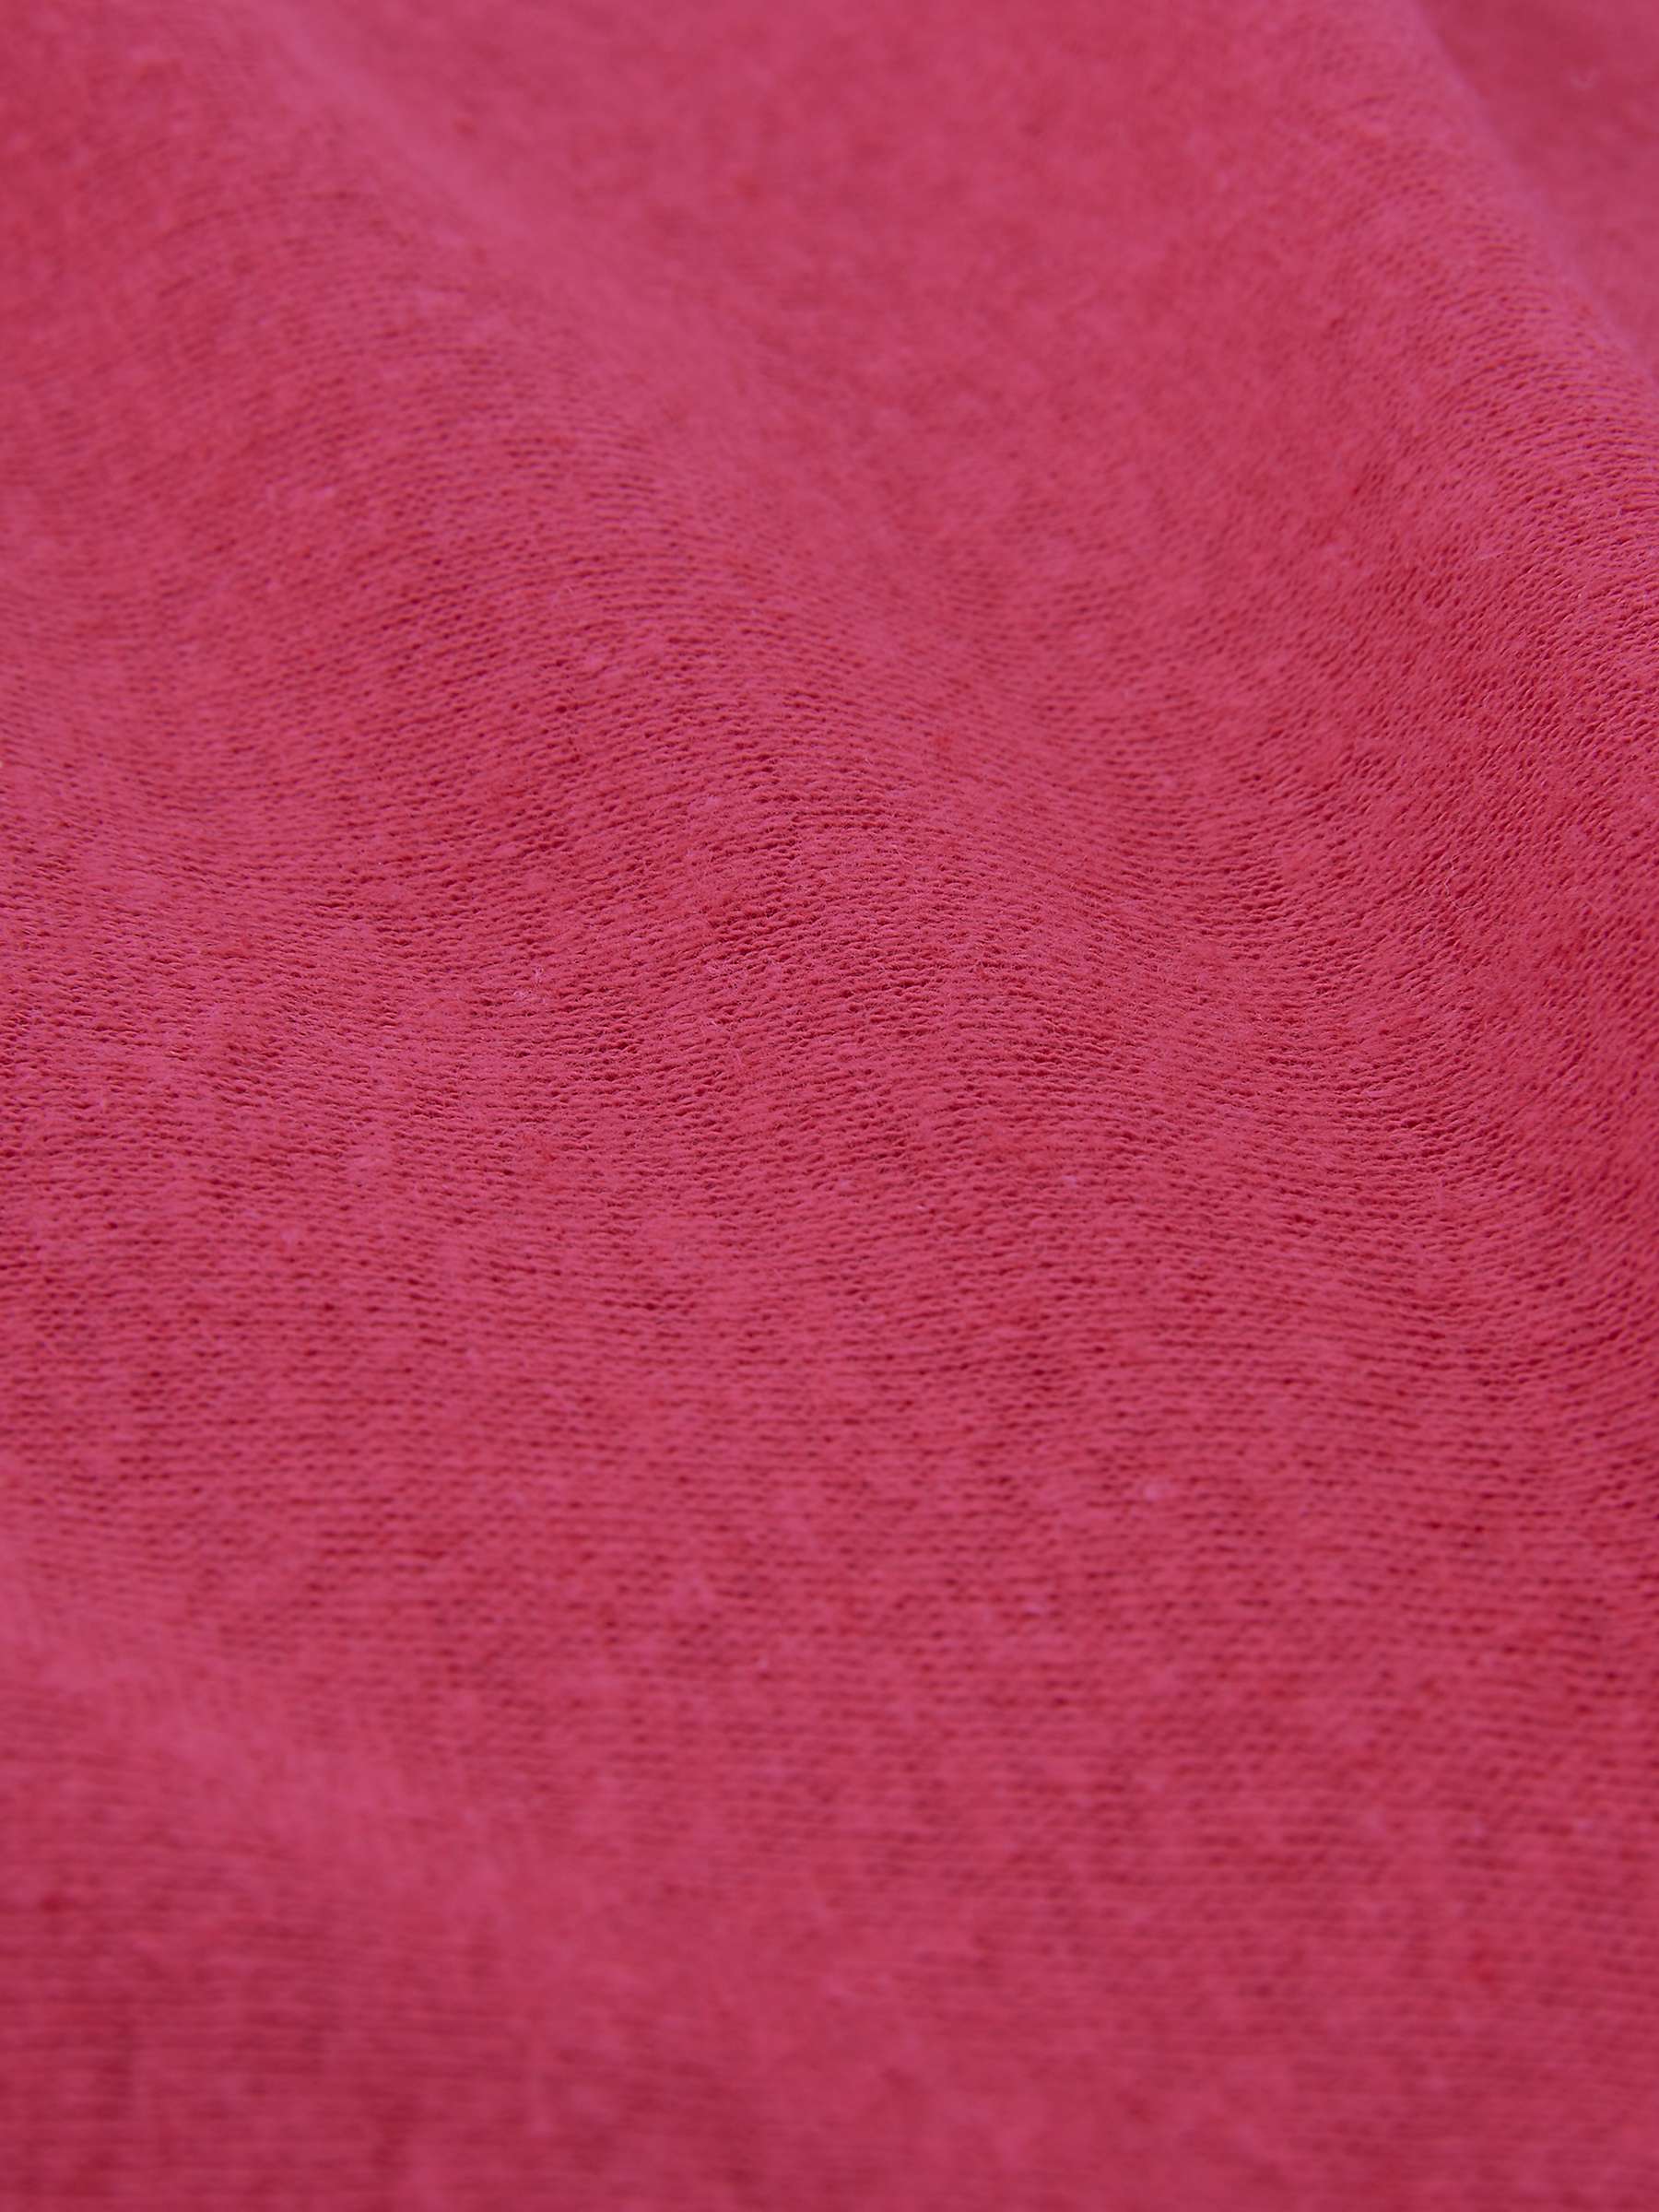 Buy Celtic & Co. Linen Blend Short Sleeve V Neck T-Shirt Online at johnlewis.com